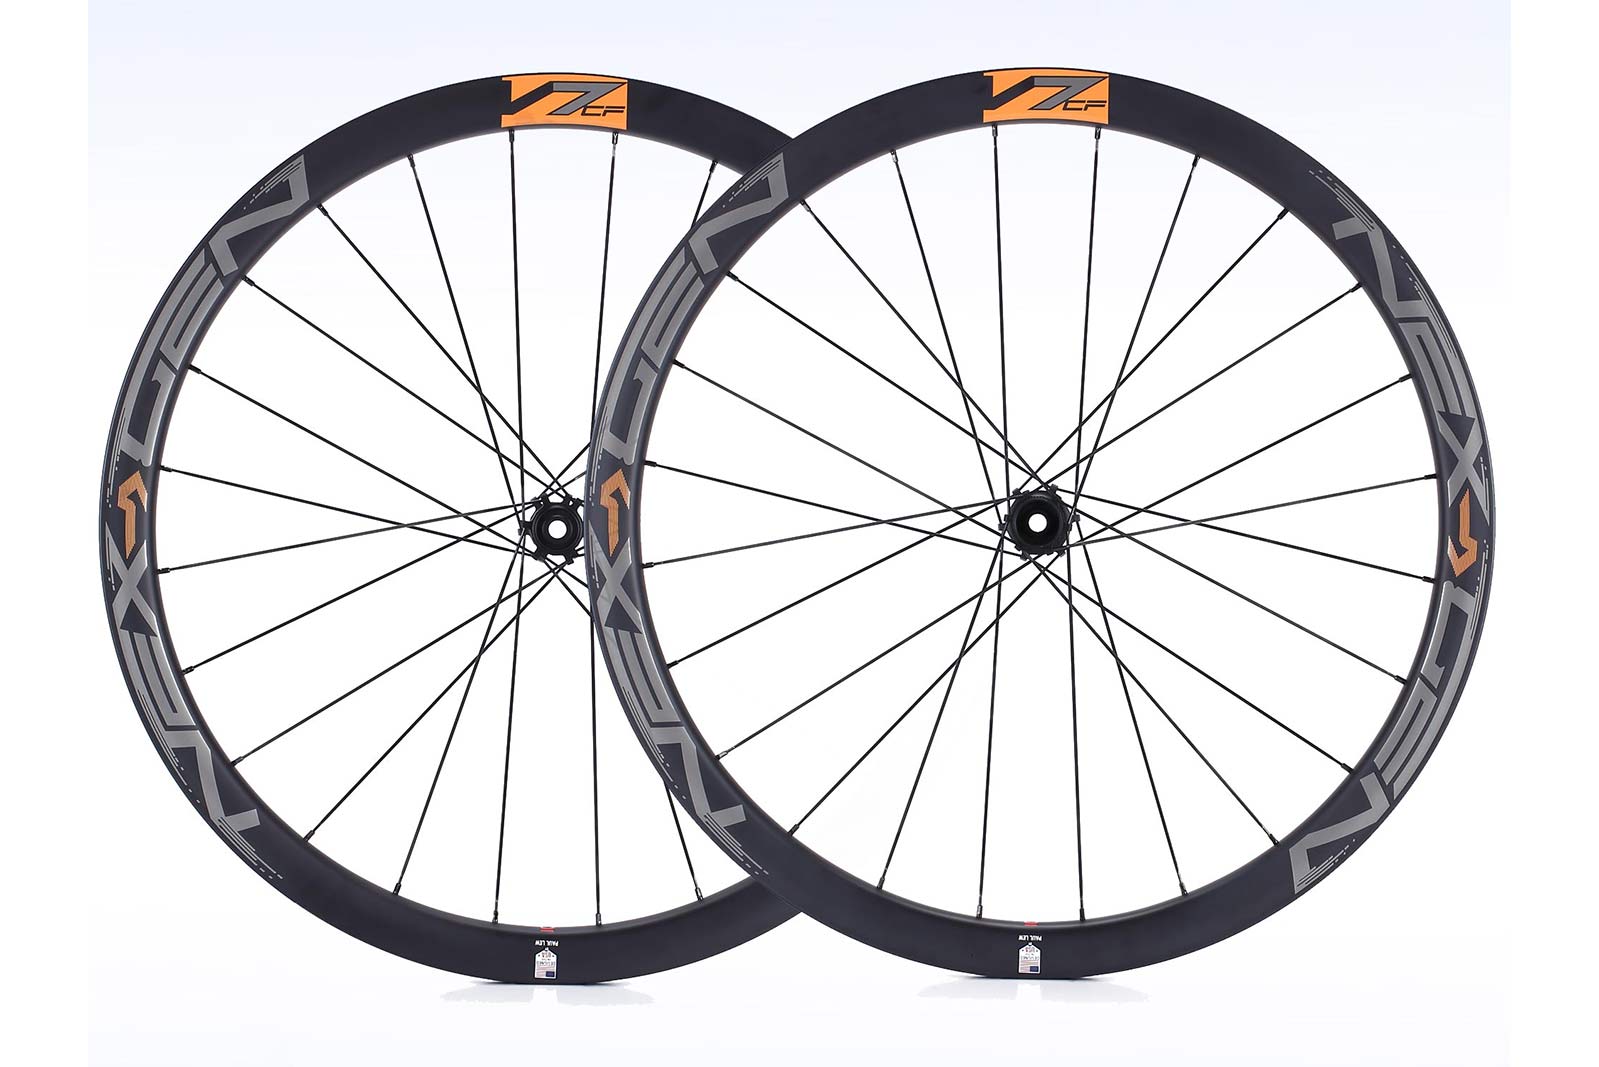 nex-gen v7 cf carbon fiber gravel bike wheelset with wide aero rims